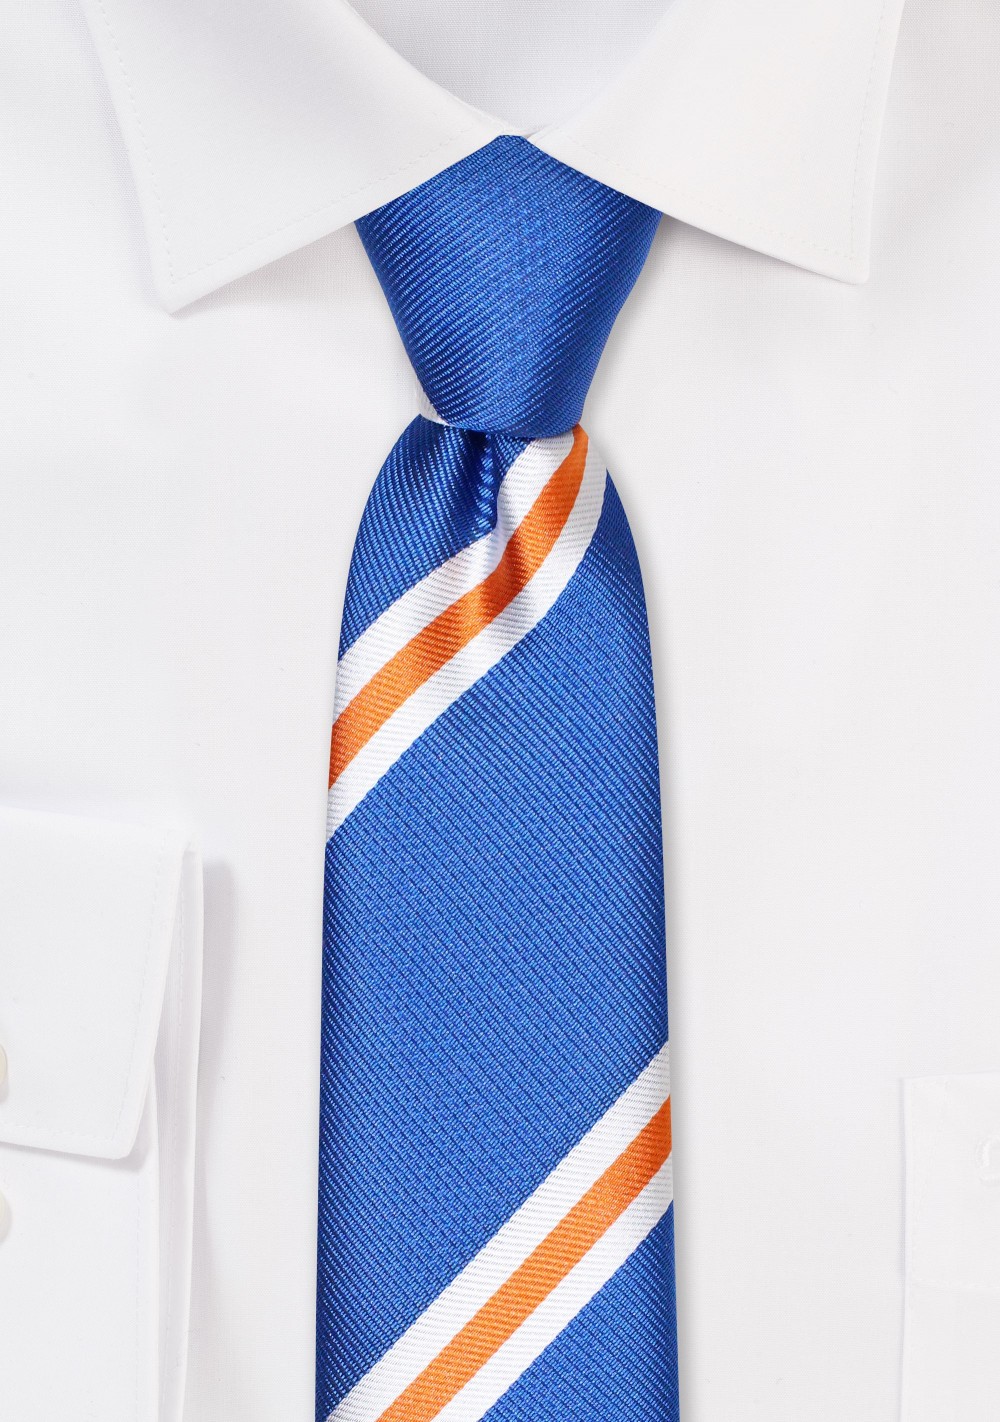 Striped Skinny Neckties | Skinny Necktie in Royal Blue, Orange, and ...